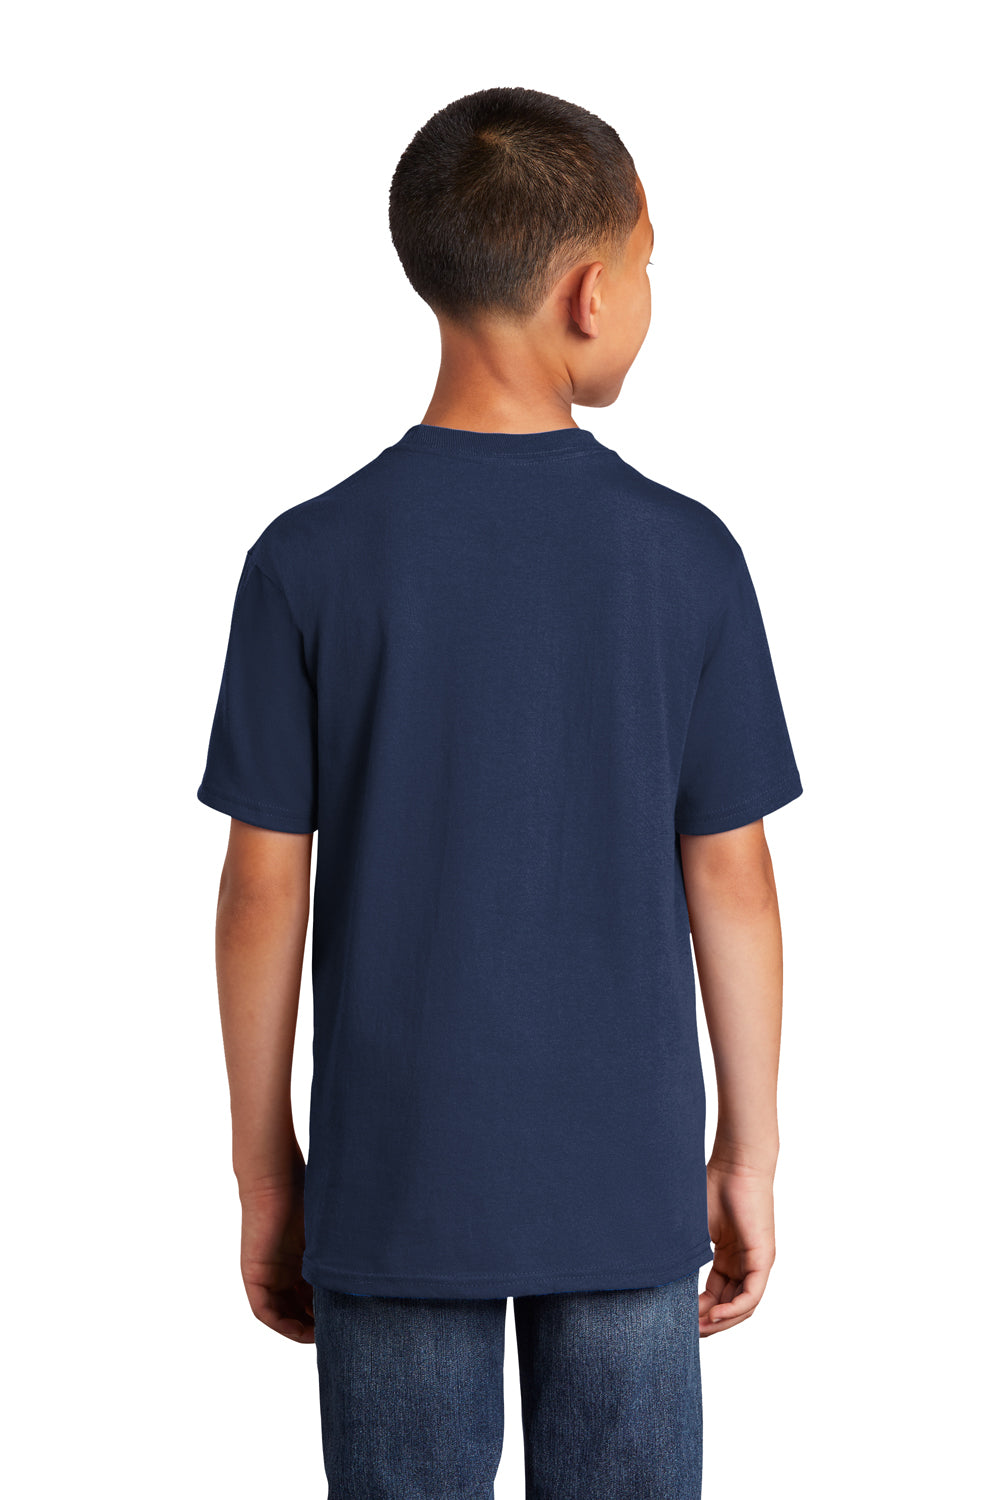 Port & Company PC54YDTG Core Cotton DTG Short Sleeve Crewneck T-Shirt Navy Blue Back